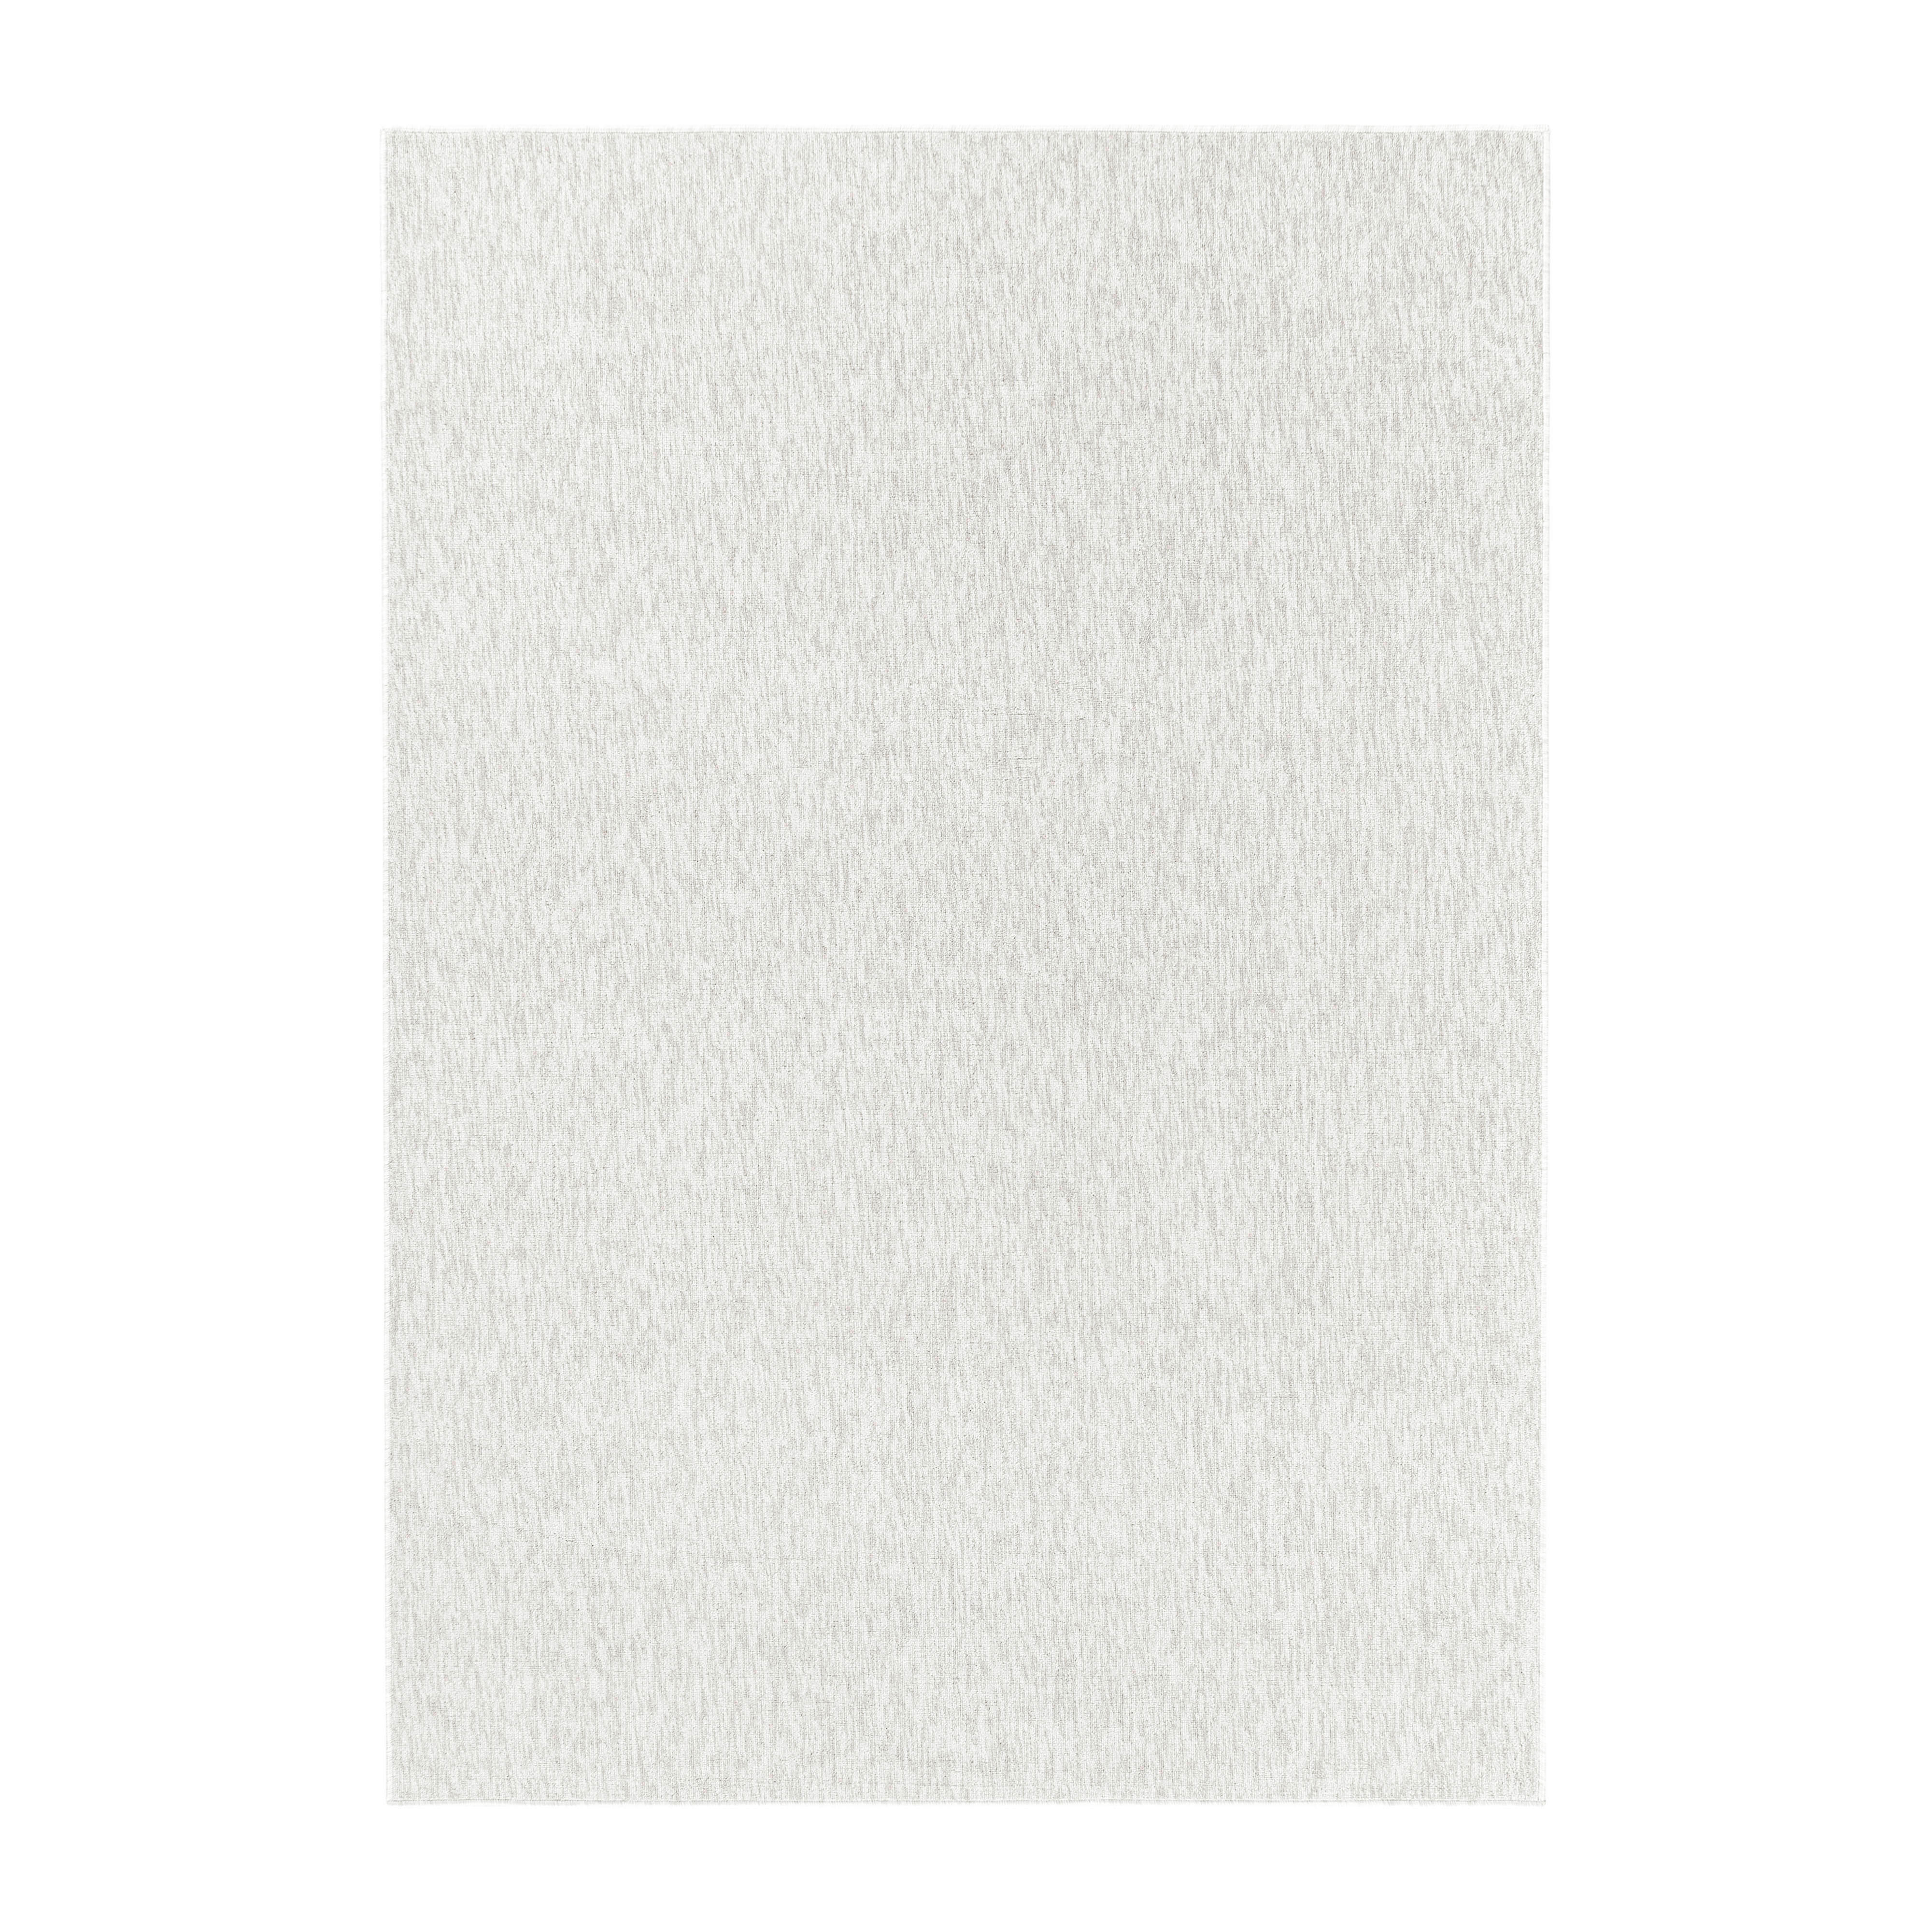 FLACHWEBETEPPICH 140/200 cm Nizza Creme  - Creme, KONVENTIONELL, Textil (140/200cm) - Novel